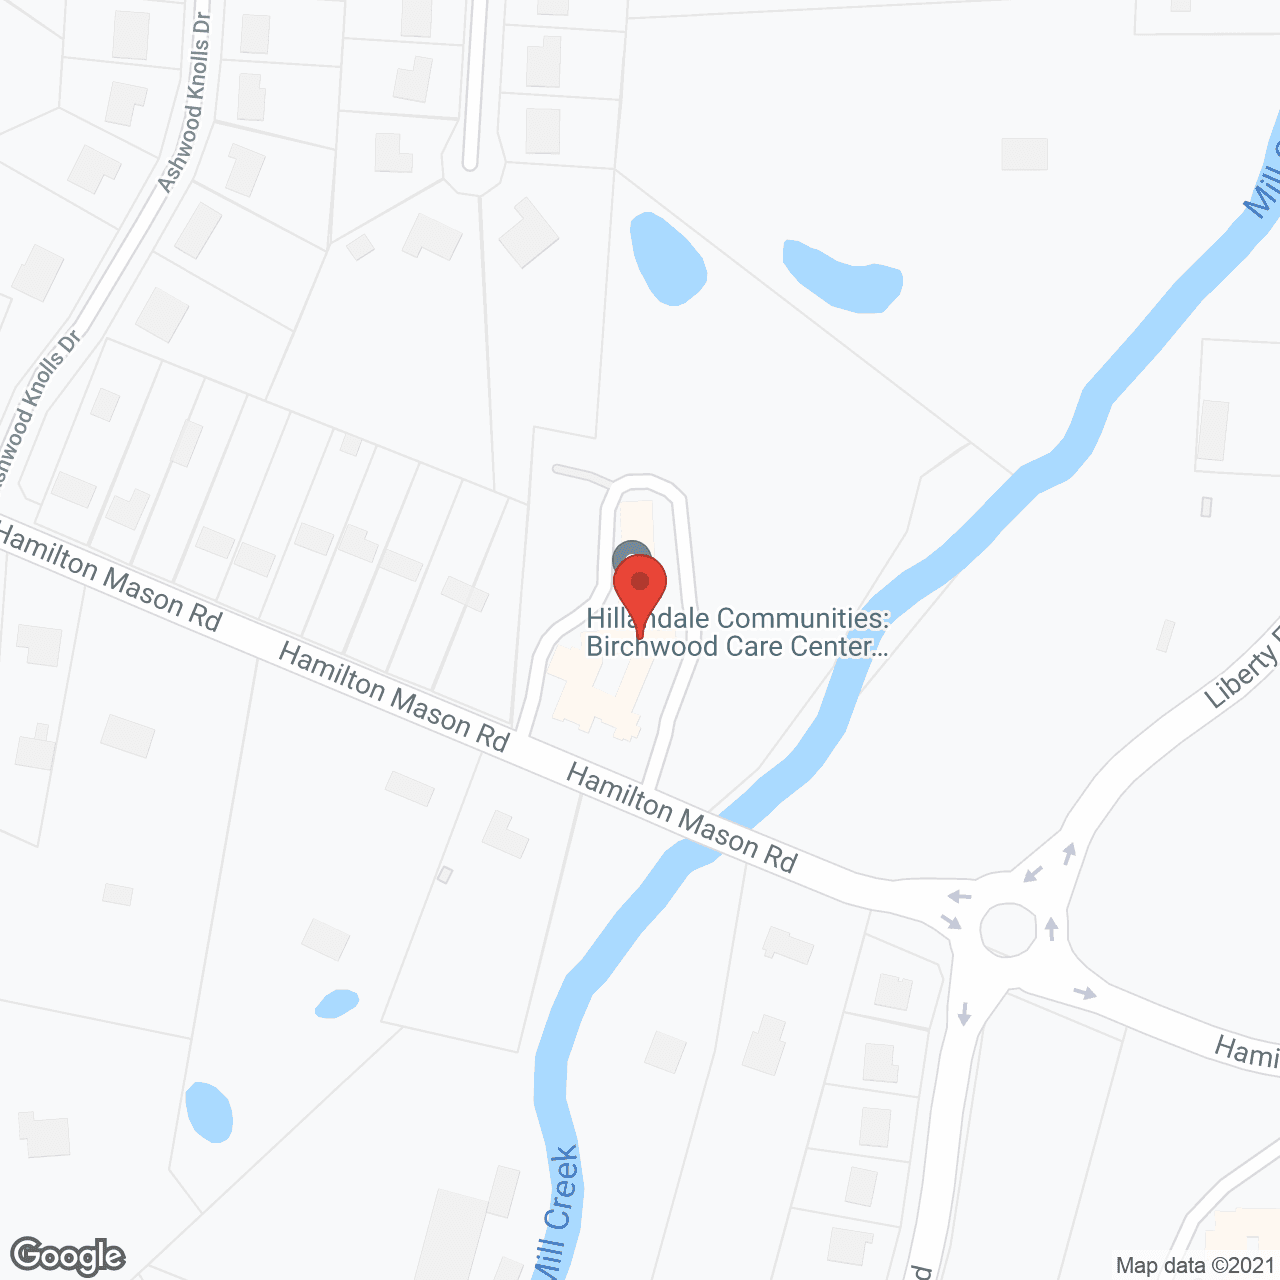 Birchwood Care Center in google map